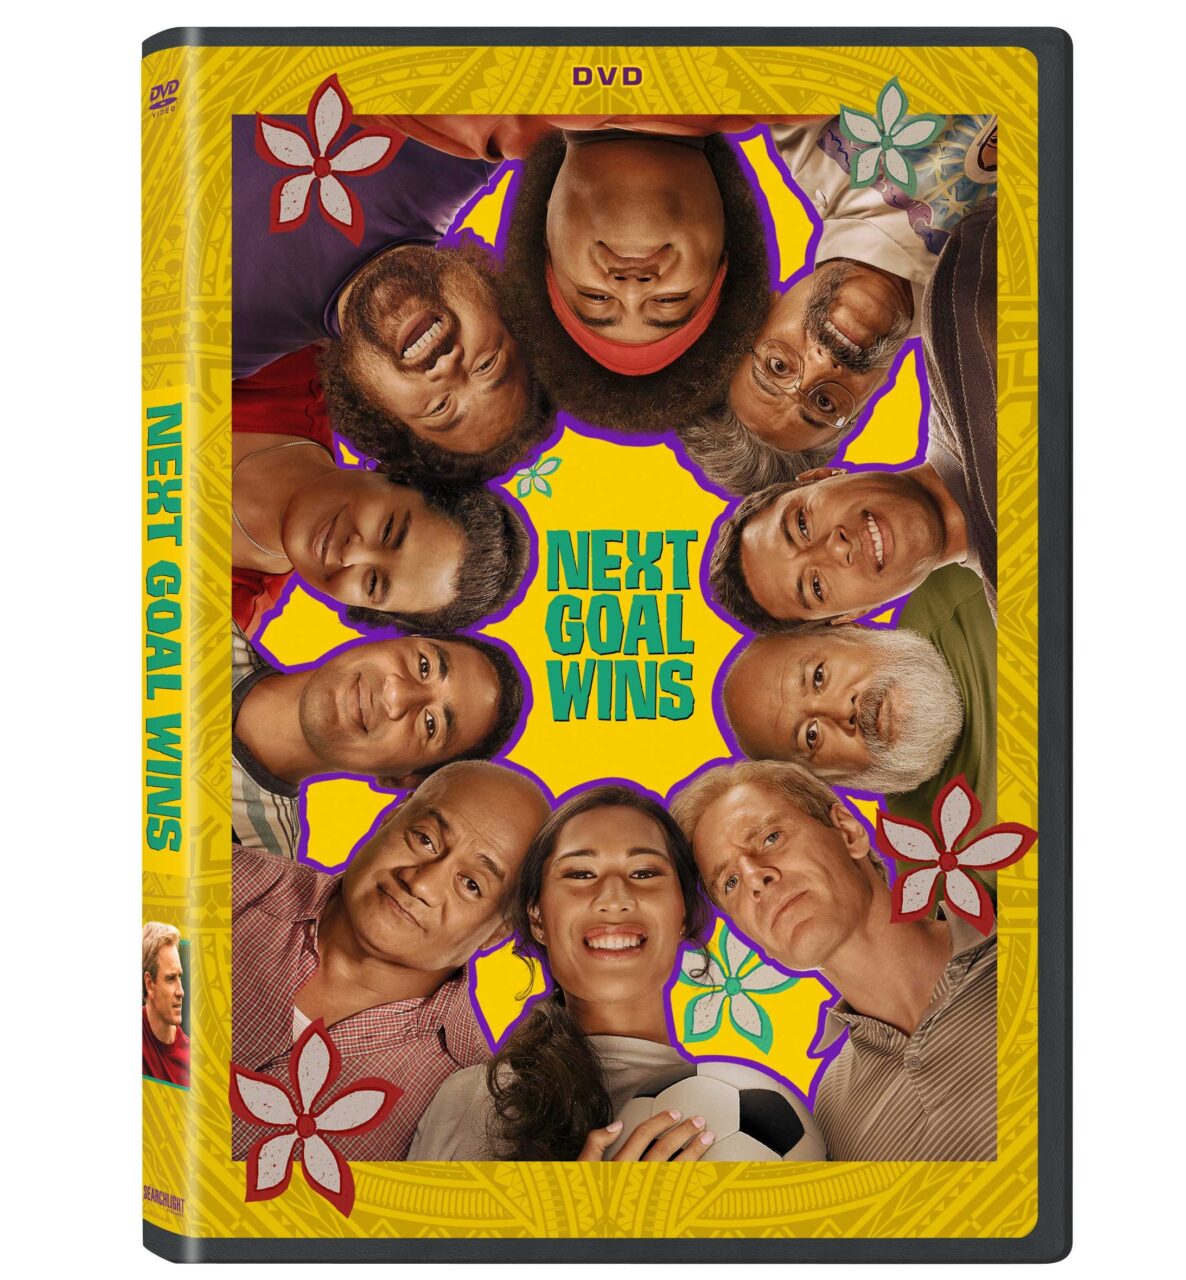 Next Goal Wins DVD cover (Searchlight Pictures/Walt Disney Studios Home Entertainment)